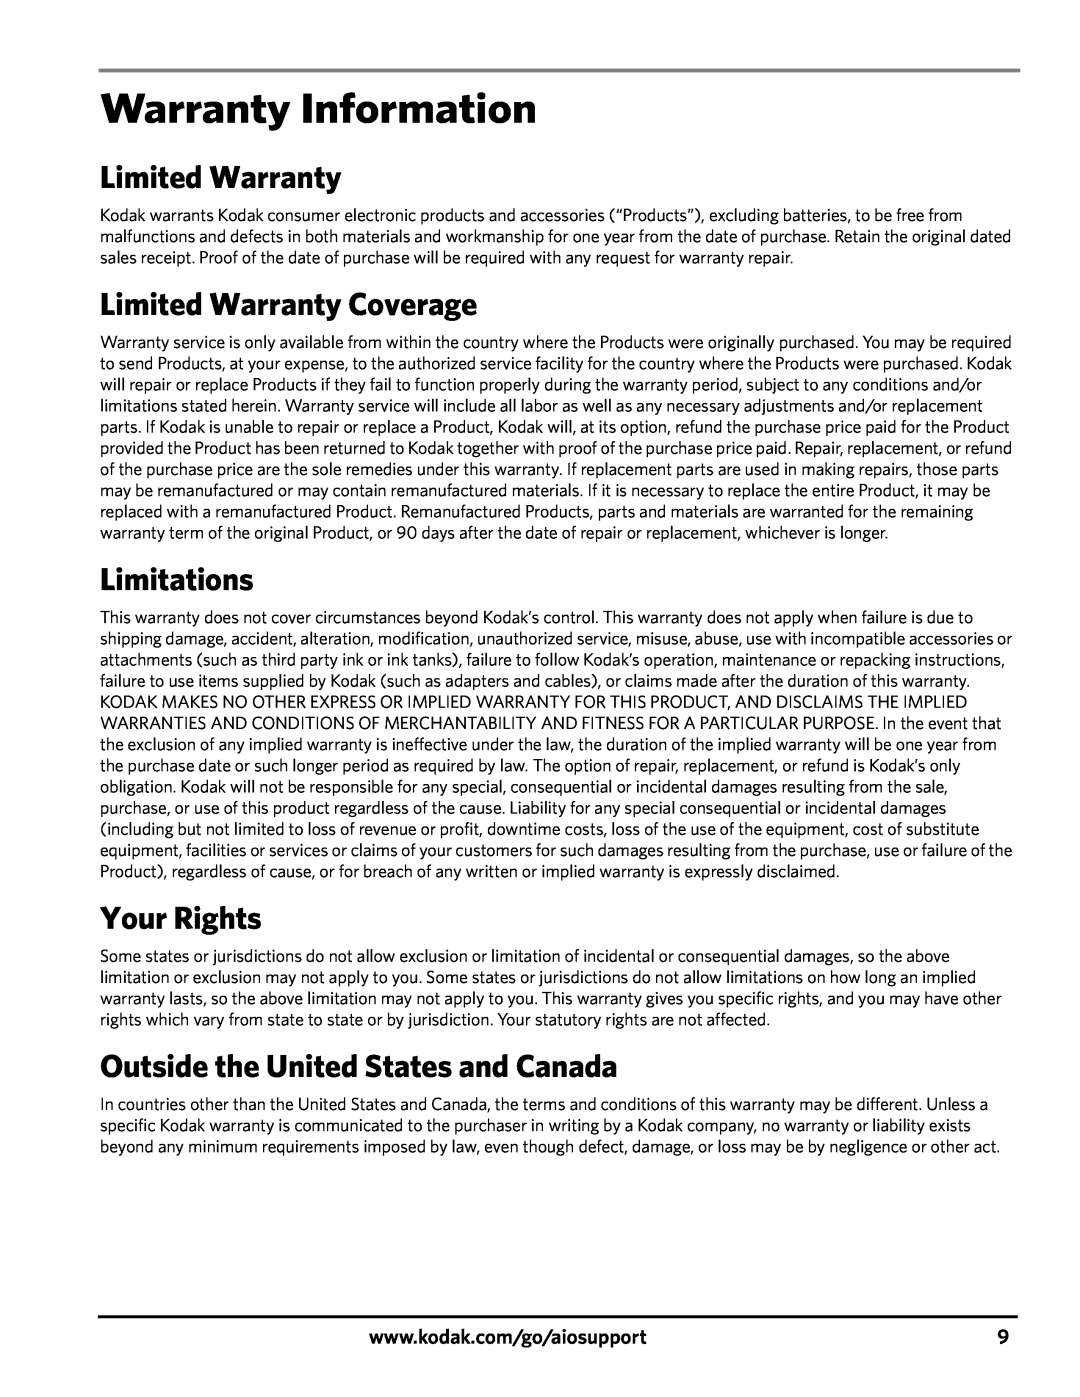 Kodak 3200 manual Warranty Information, Limited Warranty Coverage, Limitations, Your Rights 